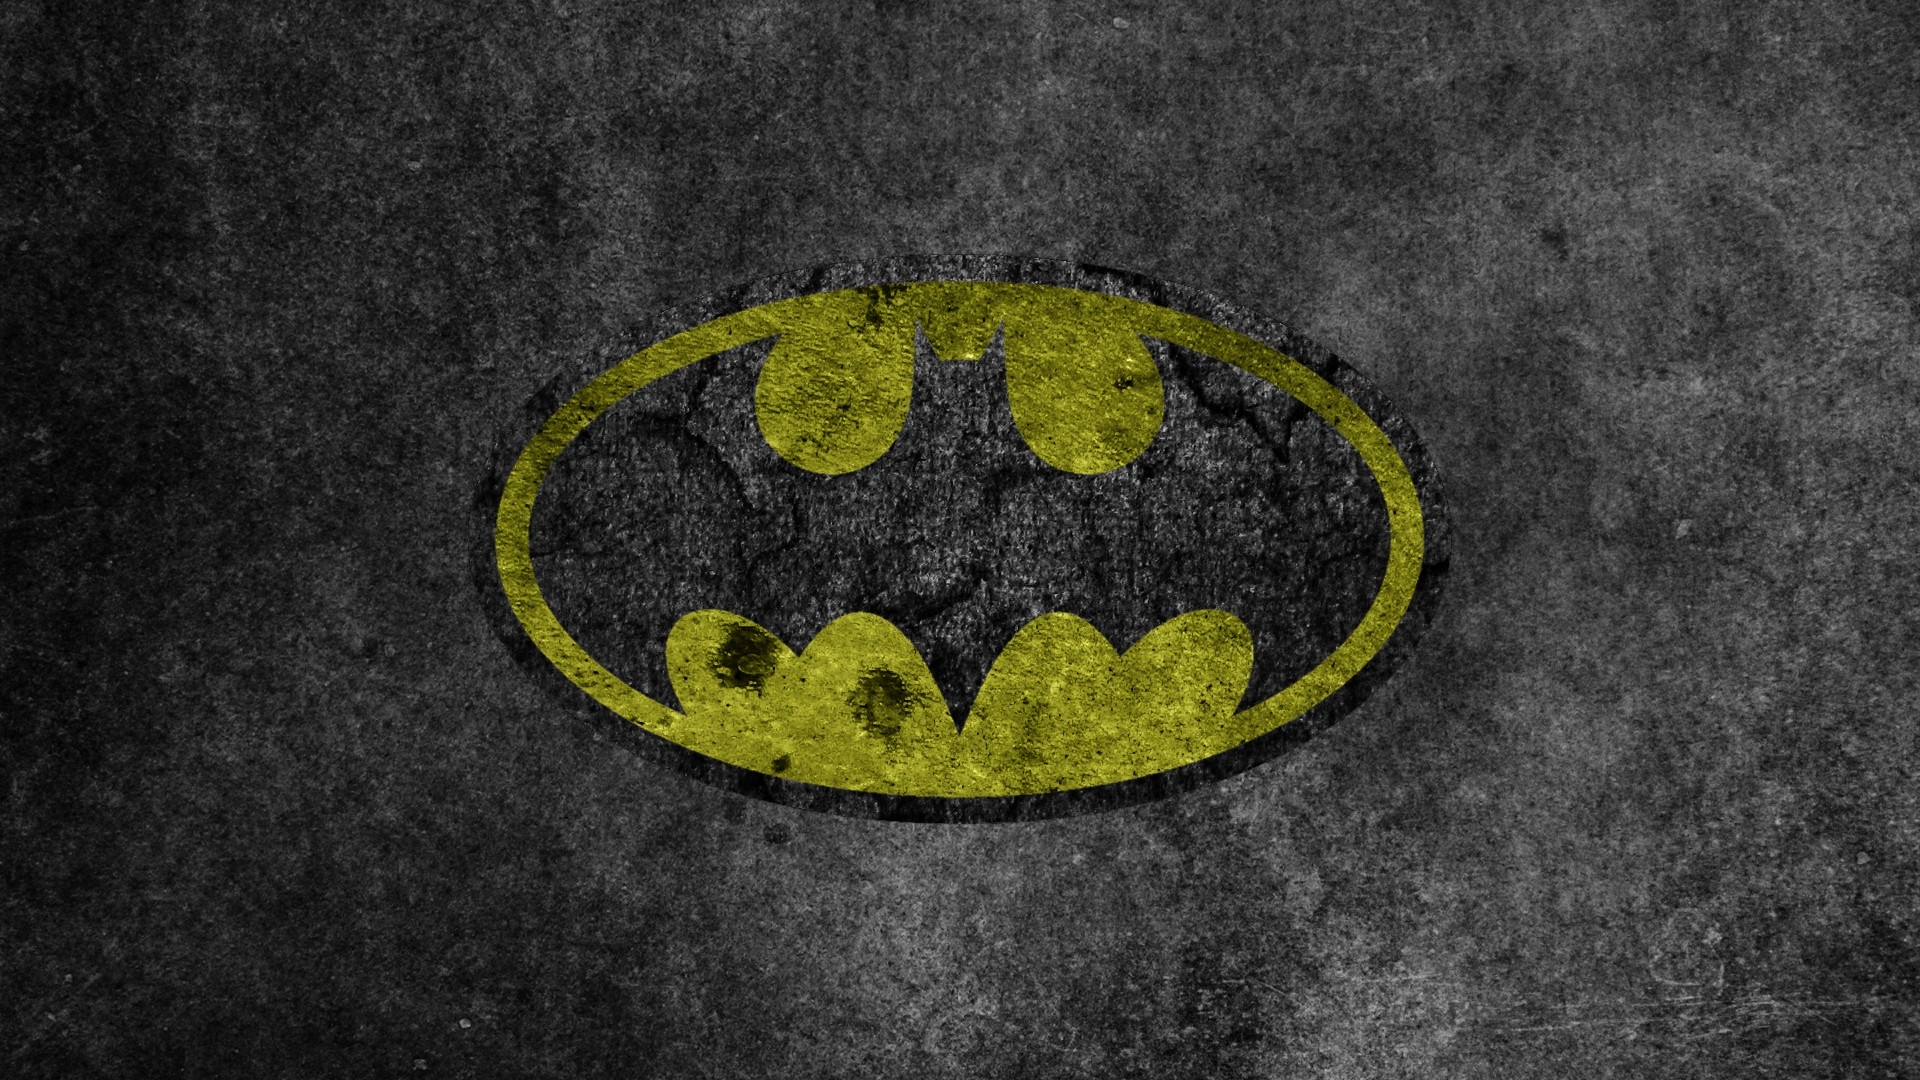 Batman Vs Superman Logo Wallpaper Android Image